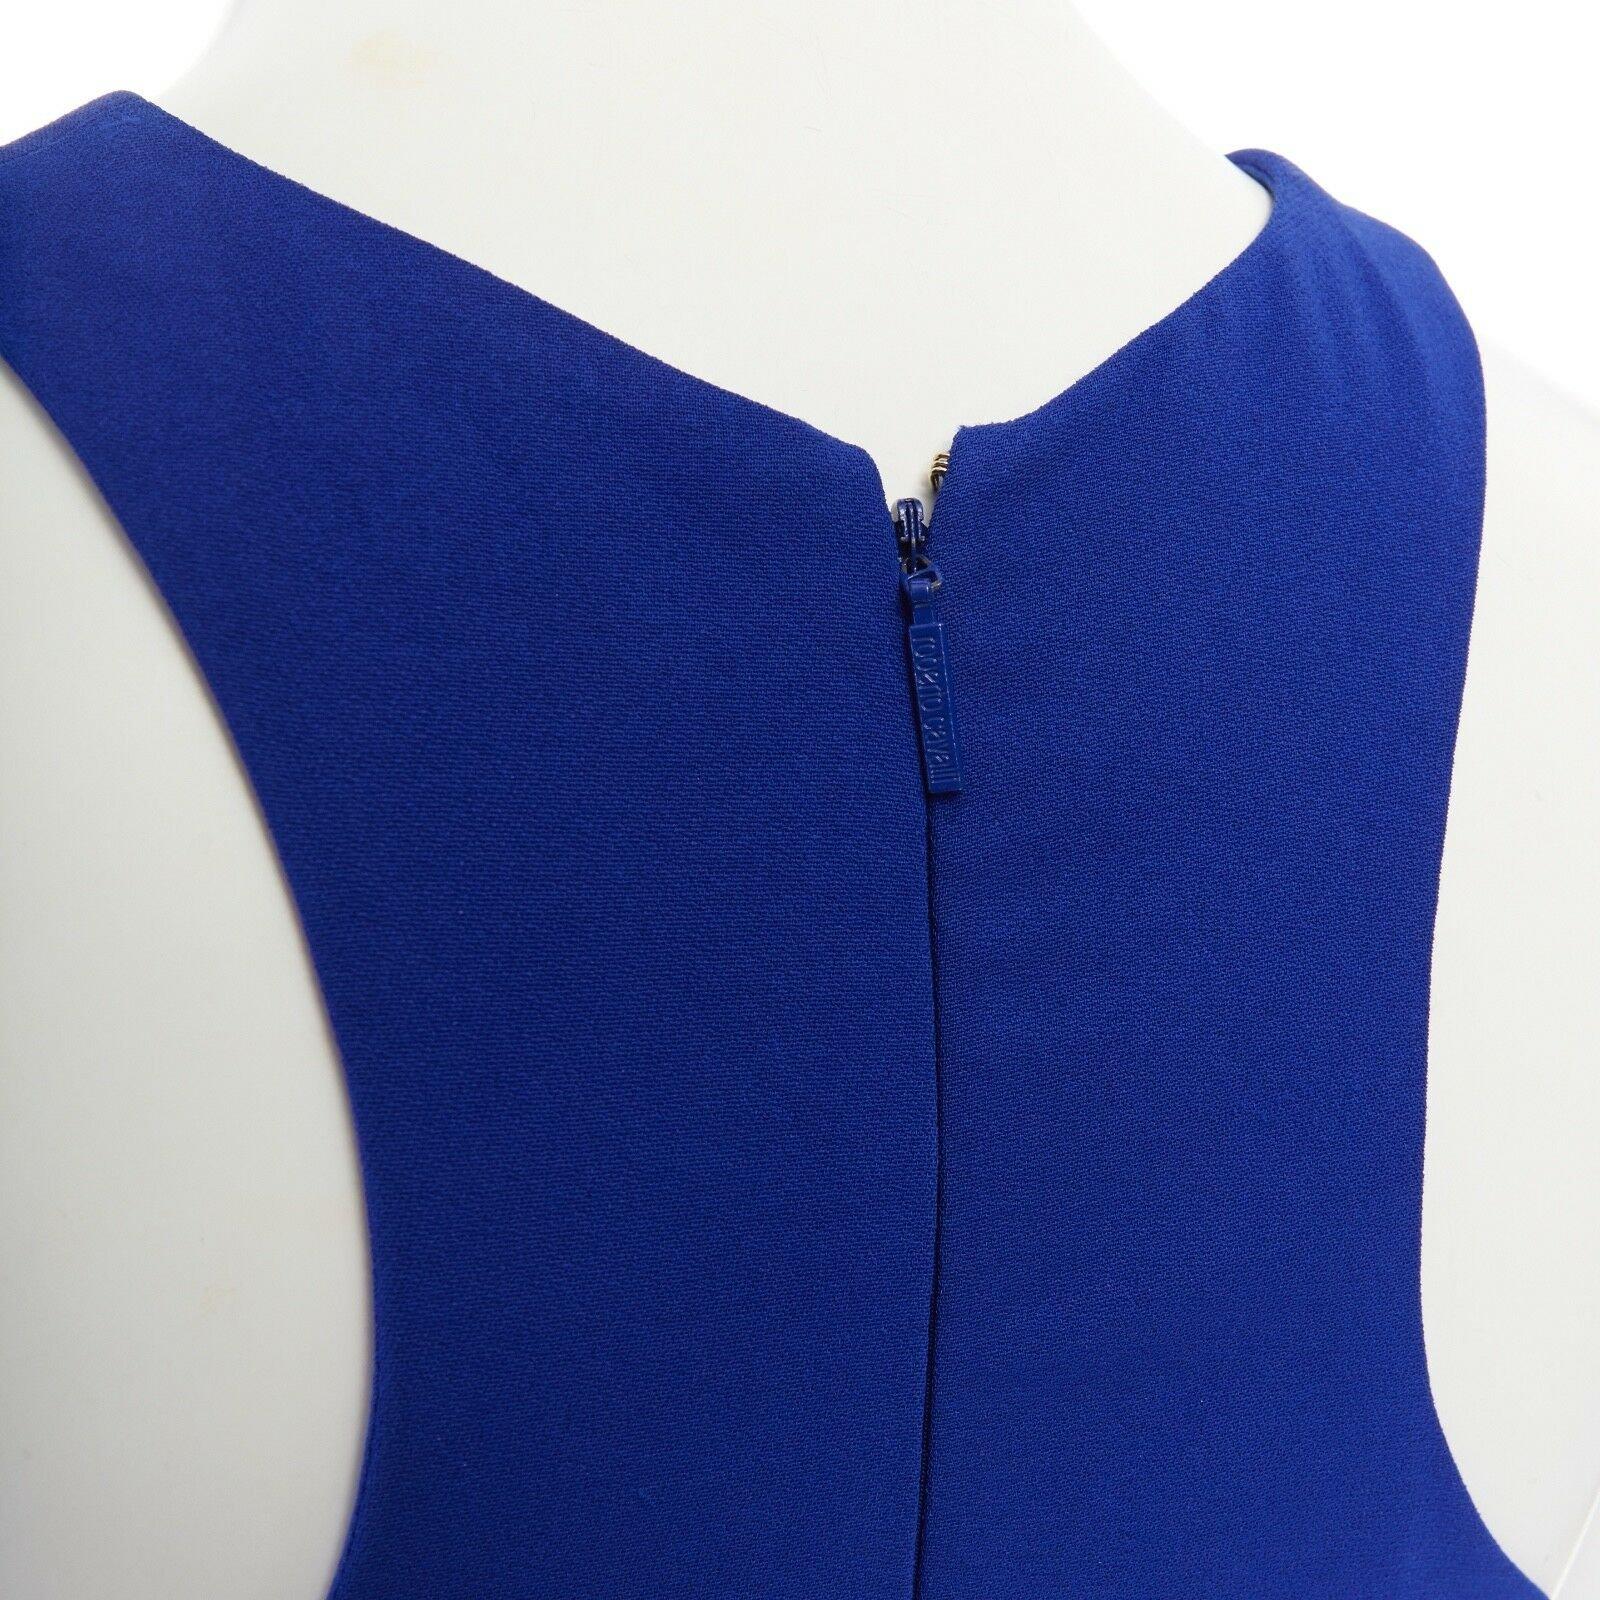 ROBERTO CAVALLI Vintage blue parrot enamel brooch cut out gown dress S 2